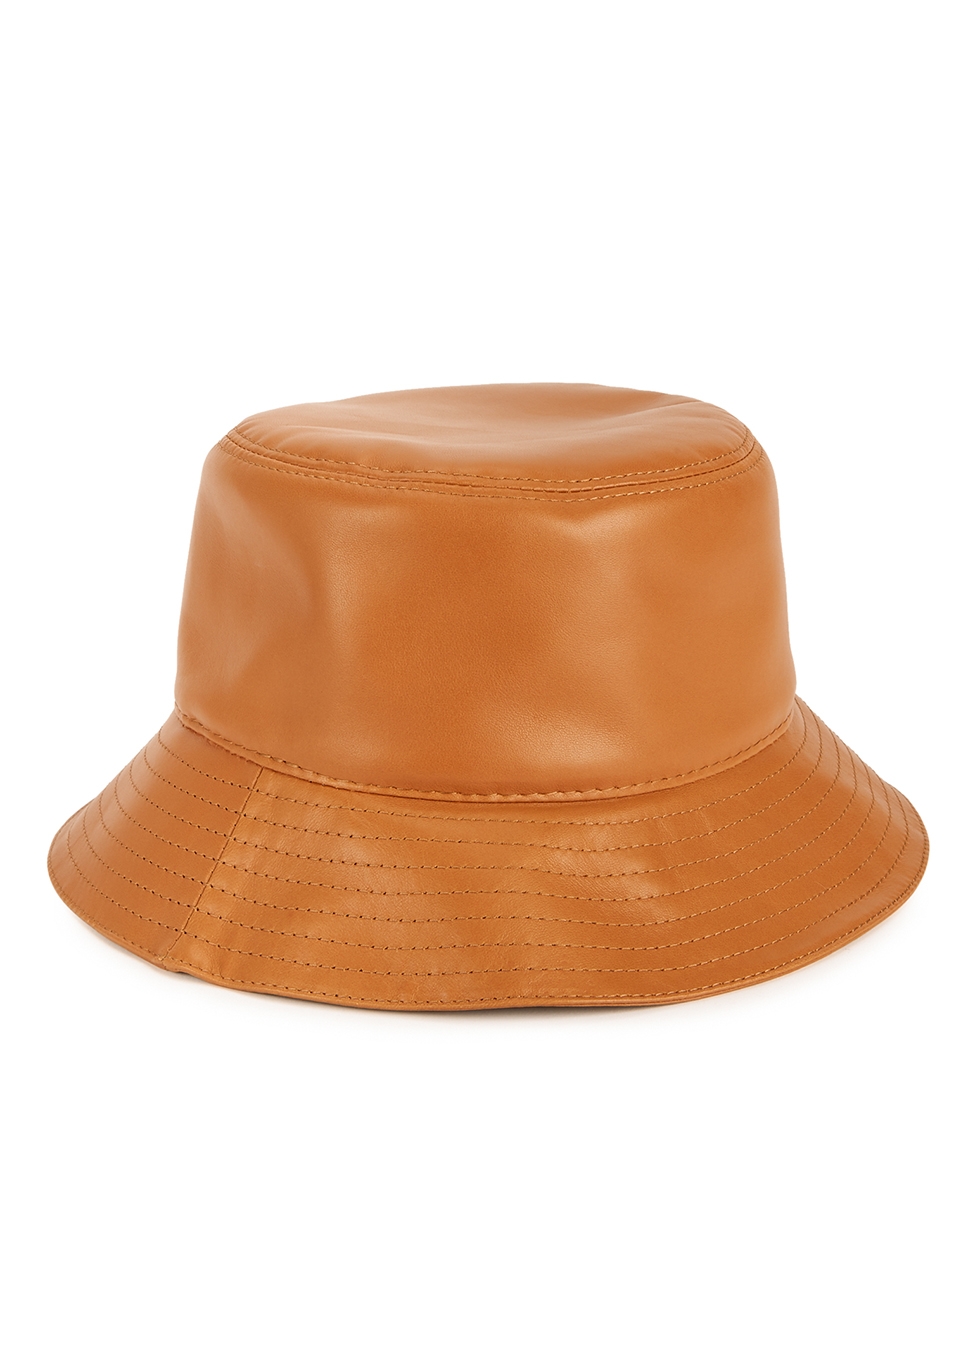 Brown logo leather bucket hat